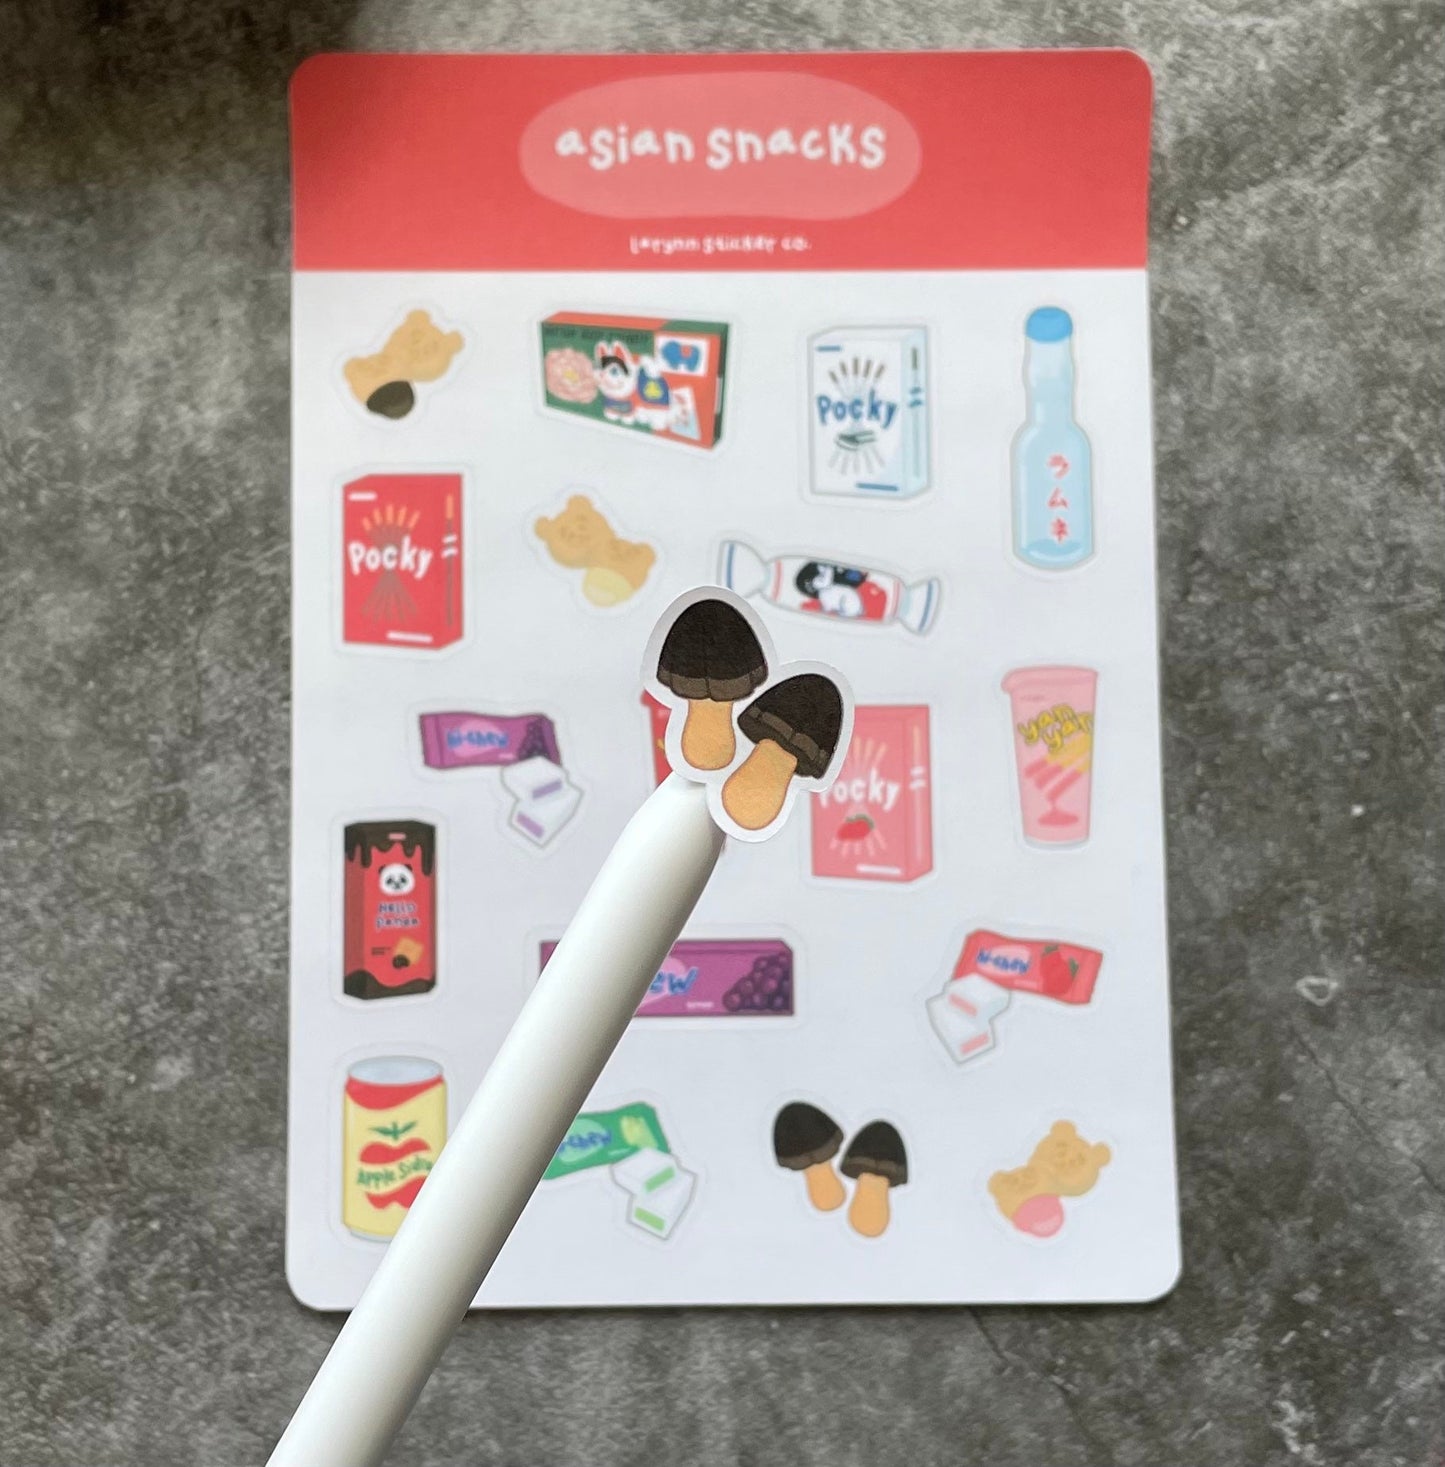 Asian Snacks FUNDRAISER Sticker Sheet